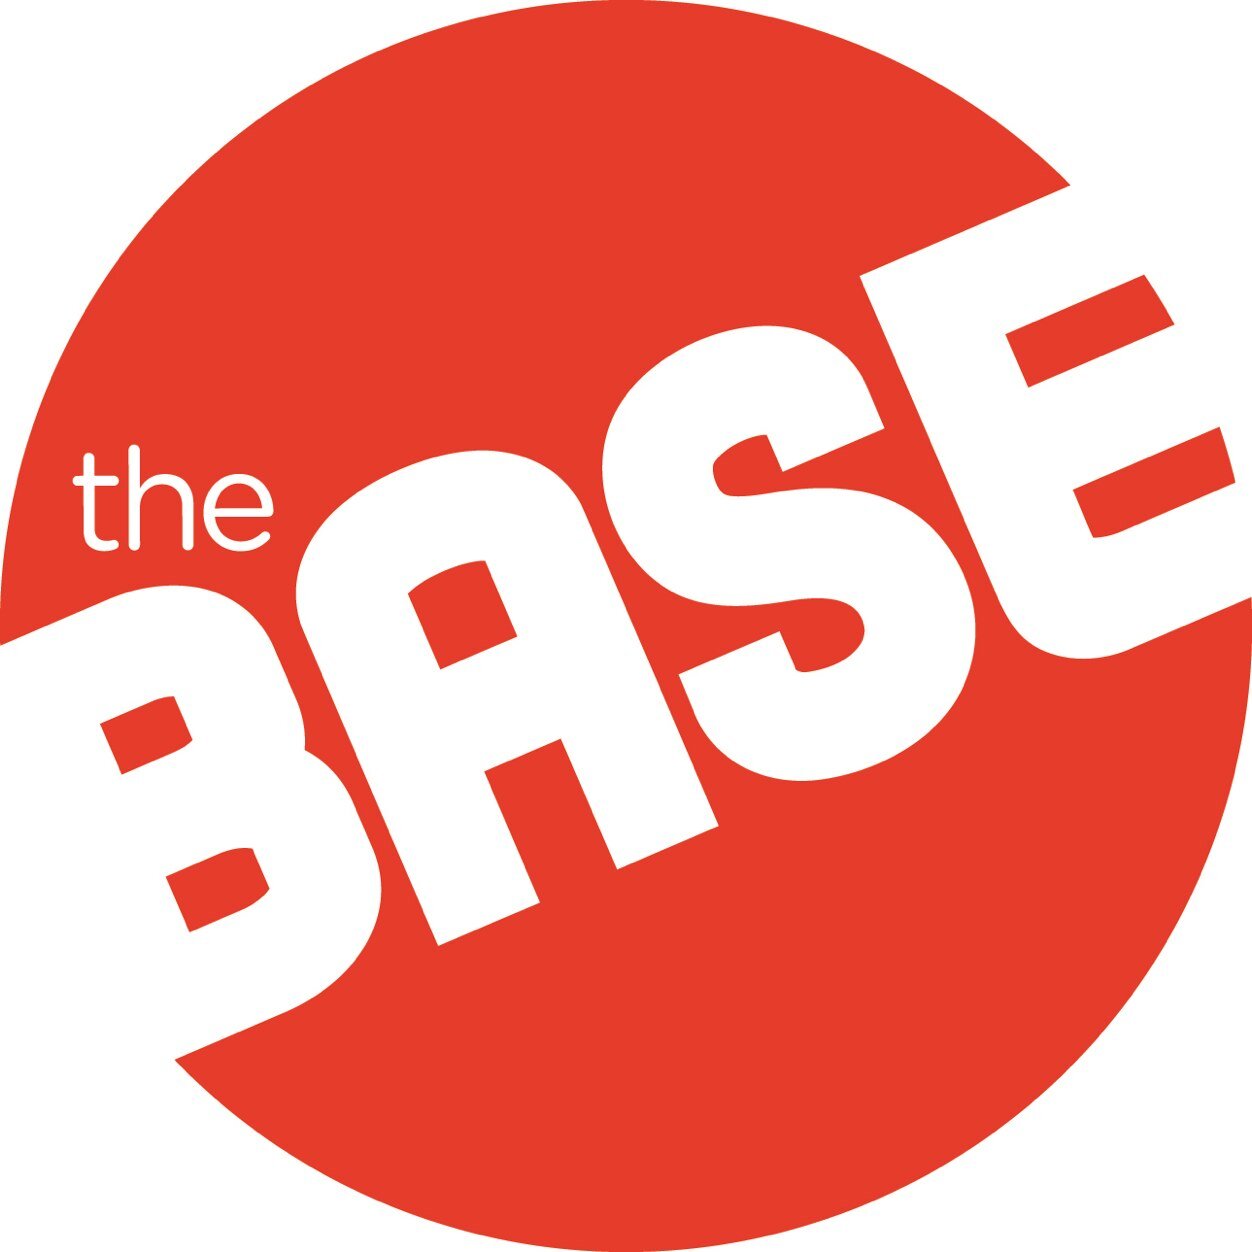 The BASE is the after school club at James Bateman Junior High School in Biddulph.